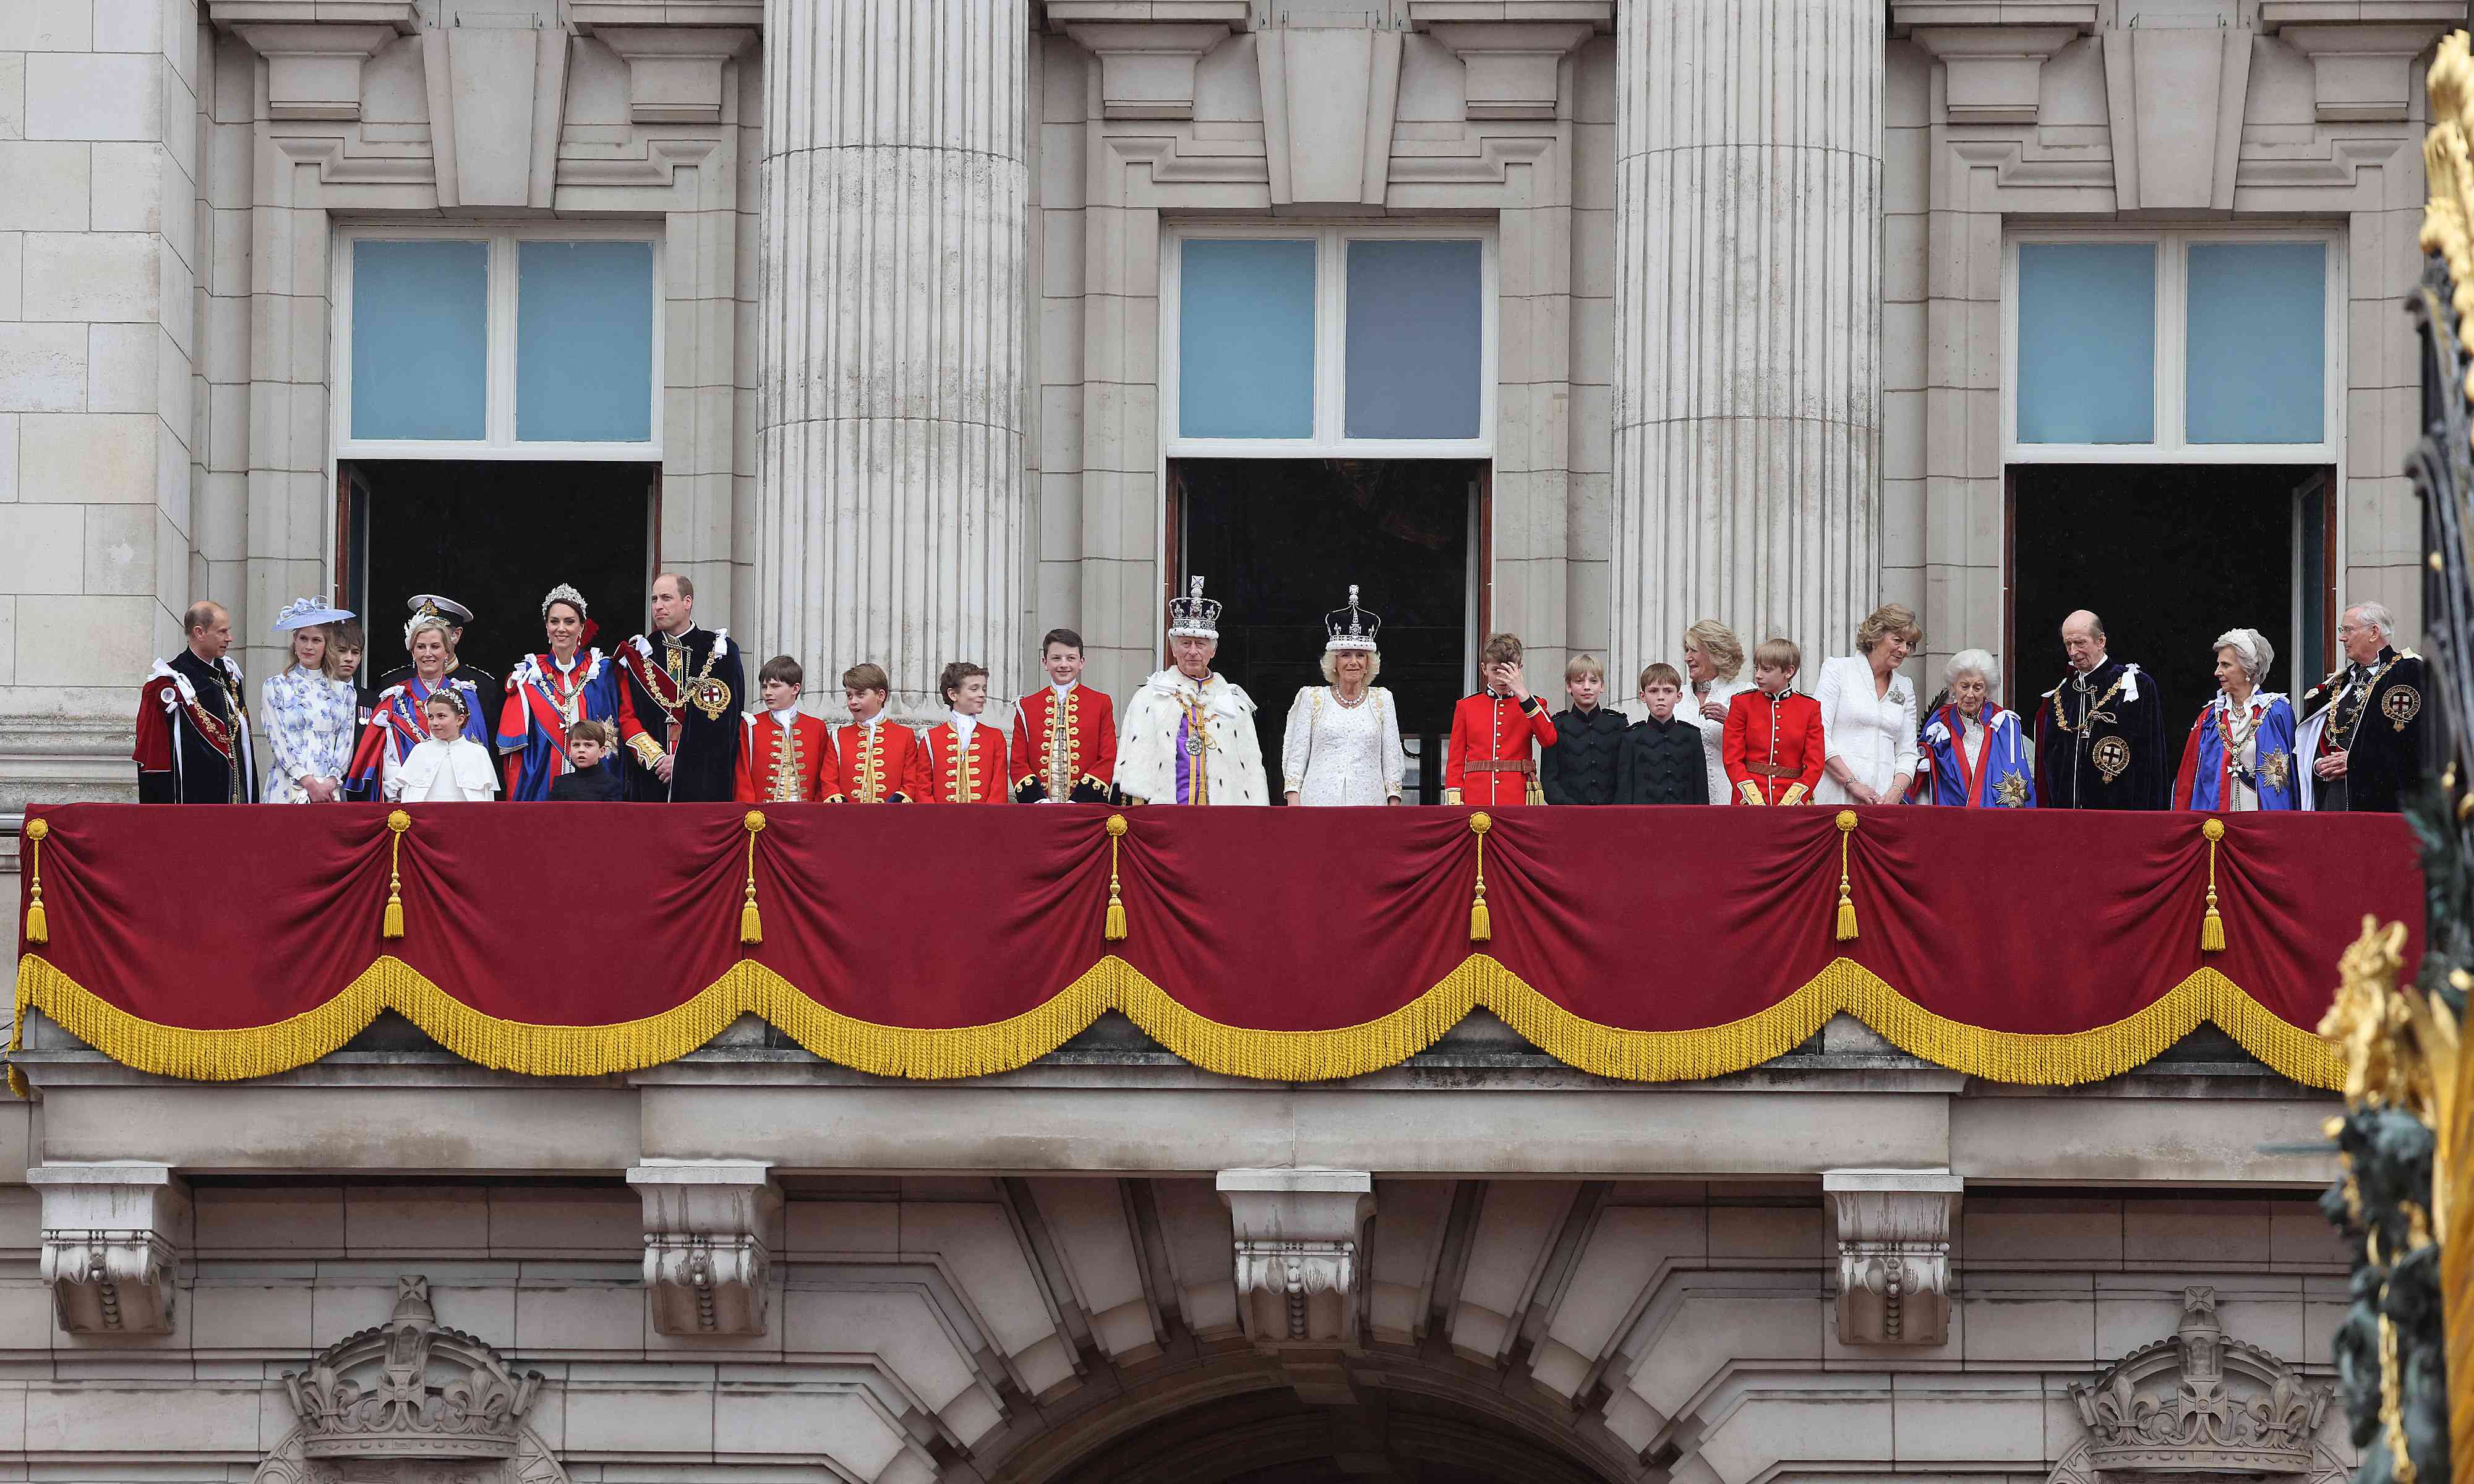 King Charles coronation family portrait on the balcony